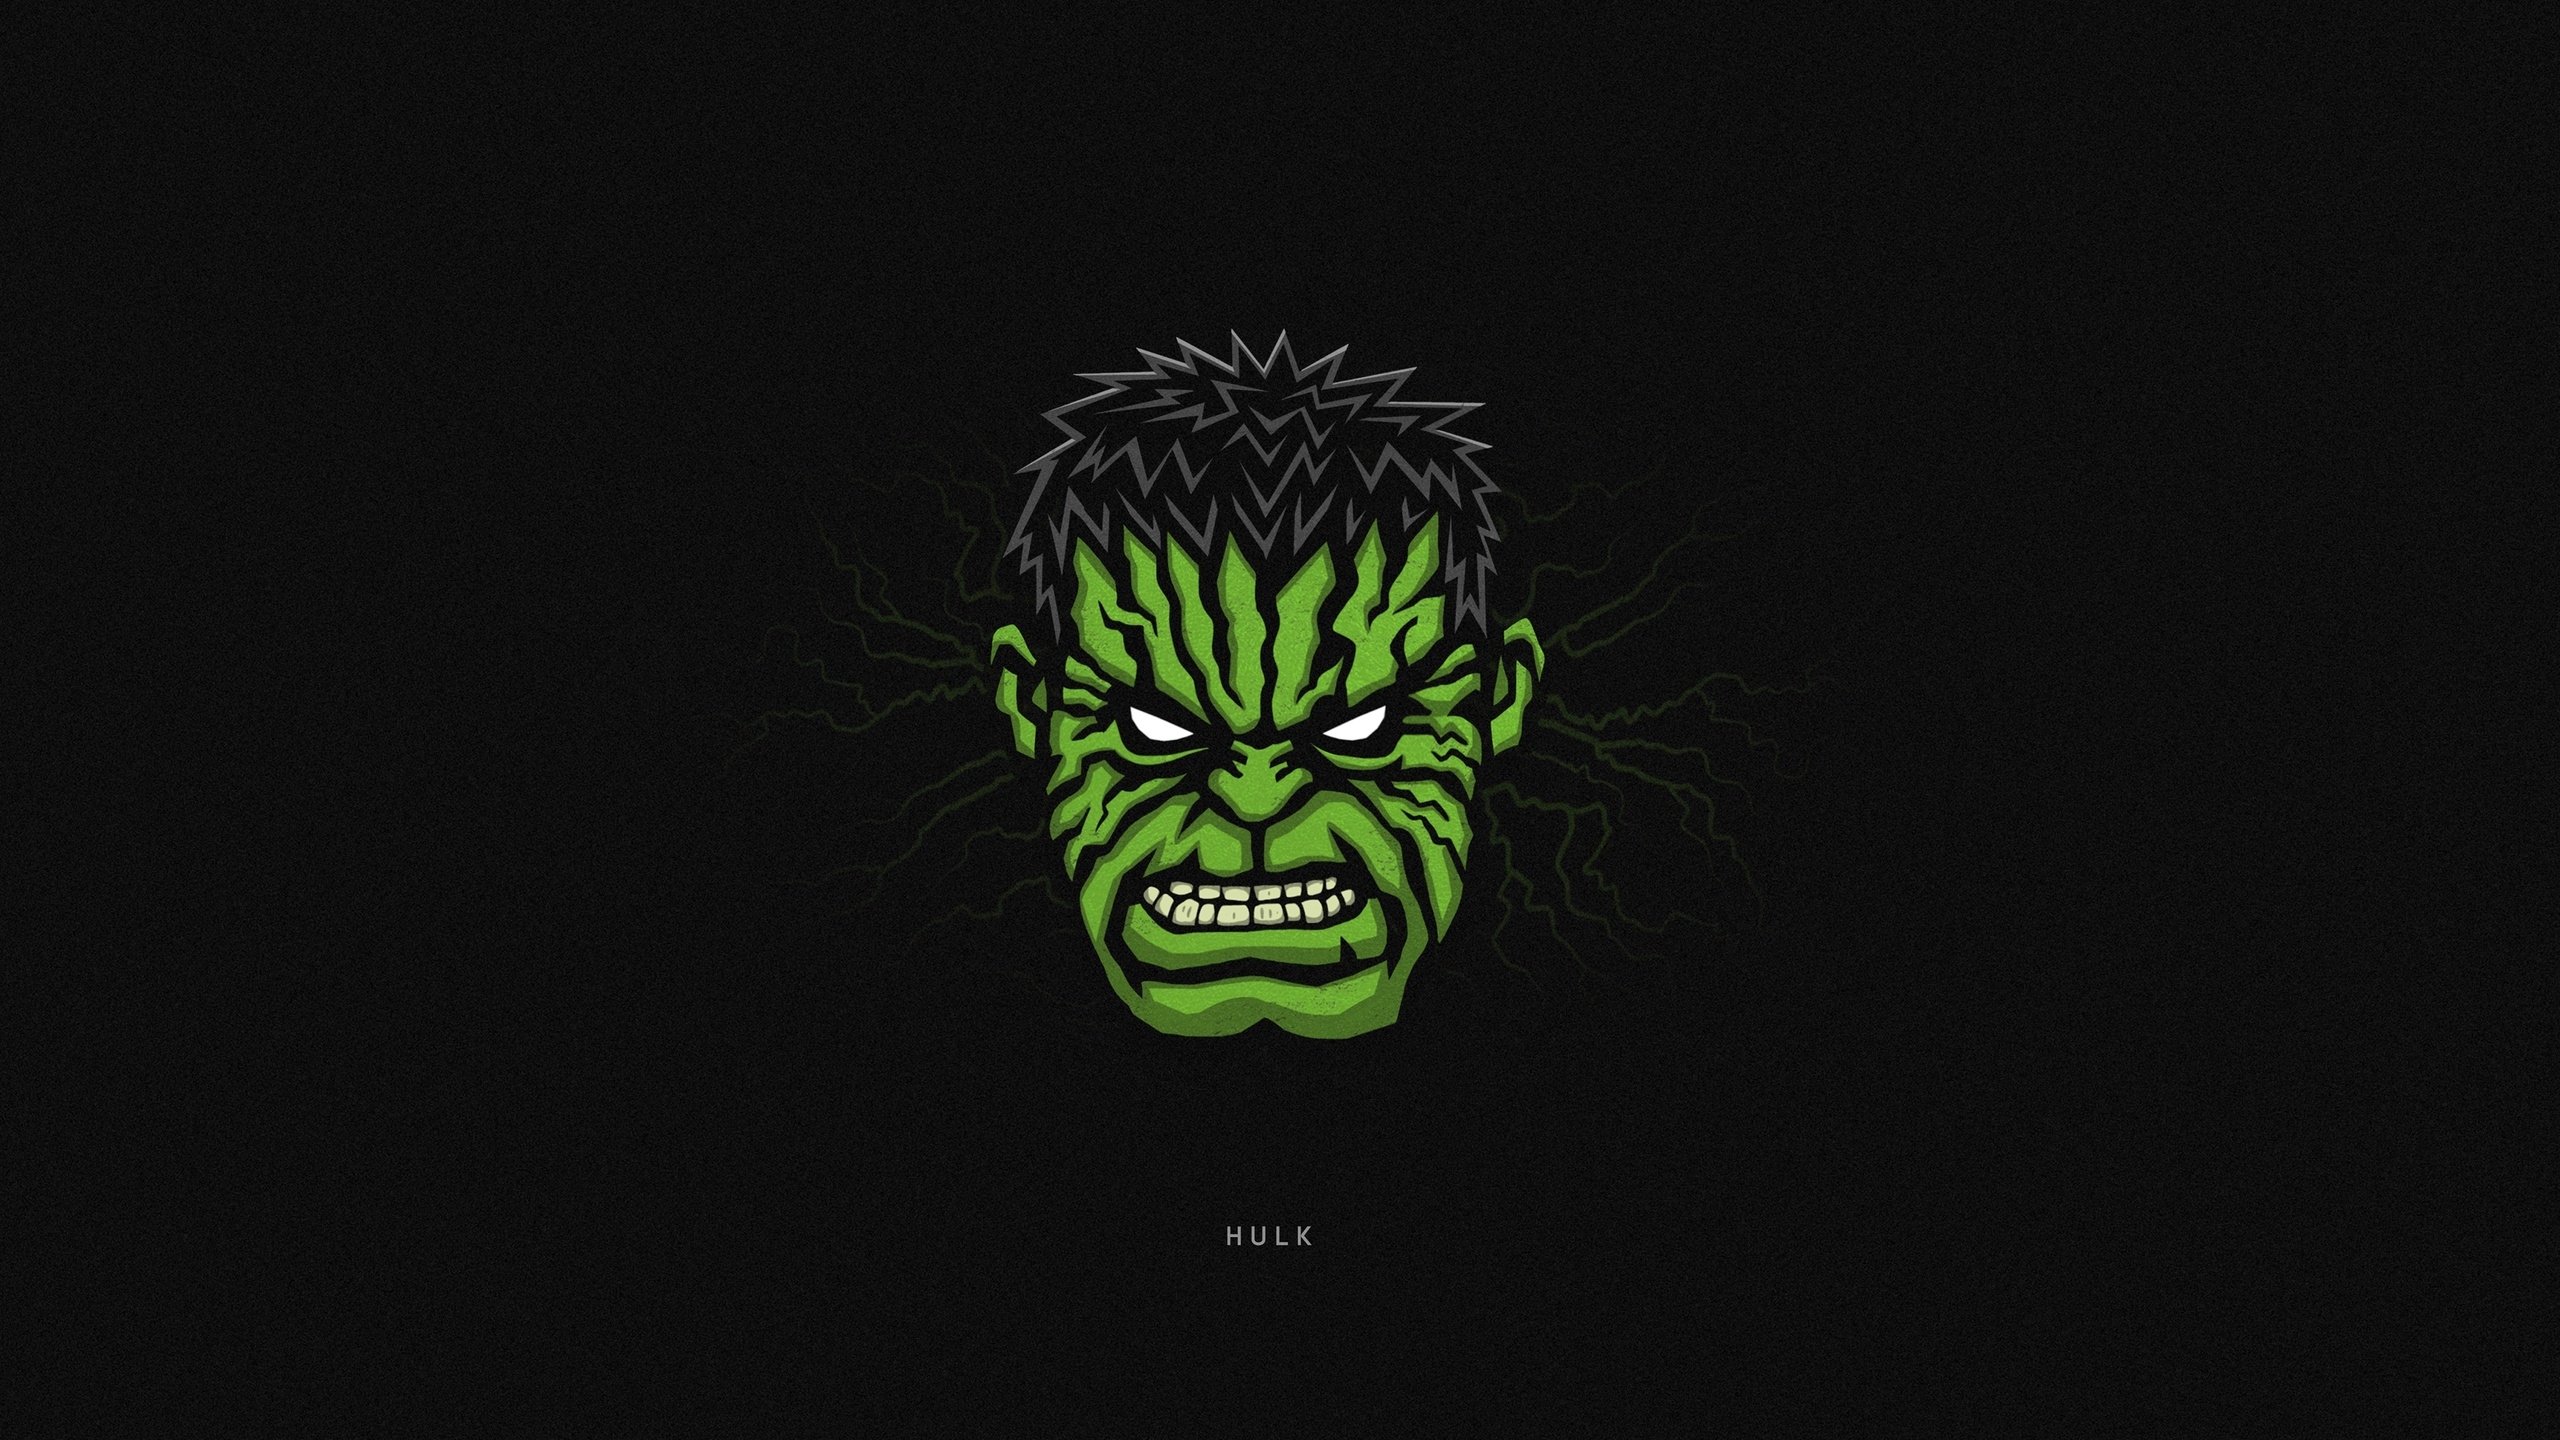 Hulk Minimal Cool Art HD Wallpaper, HD Minimalist 4K Wallpapers, Images,  Photos and Background - Wallpapers Den